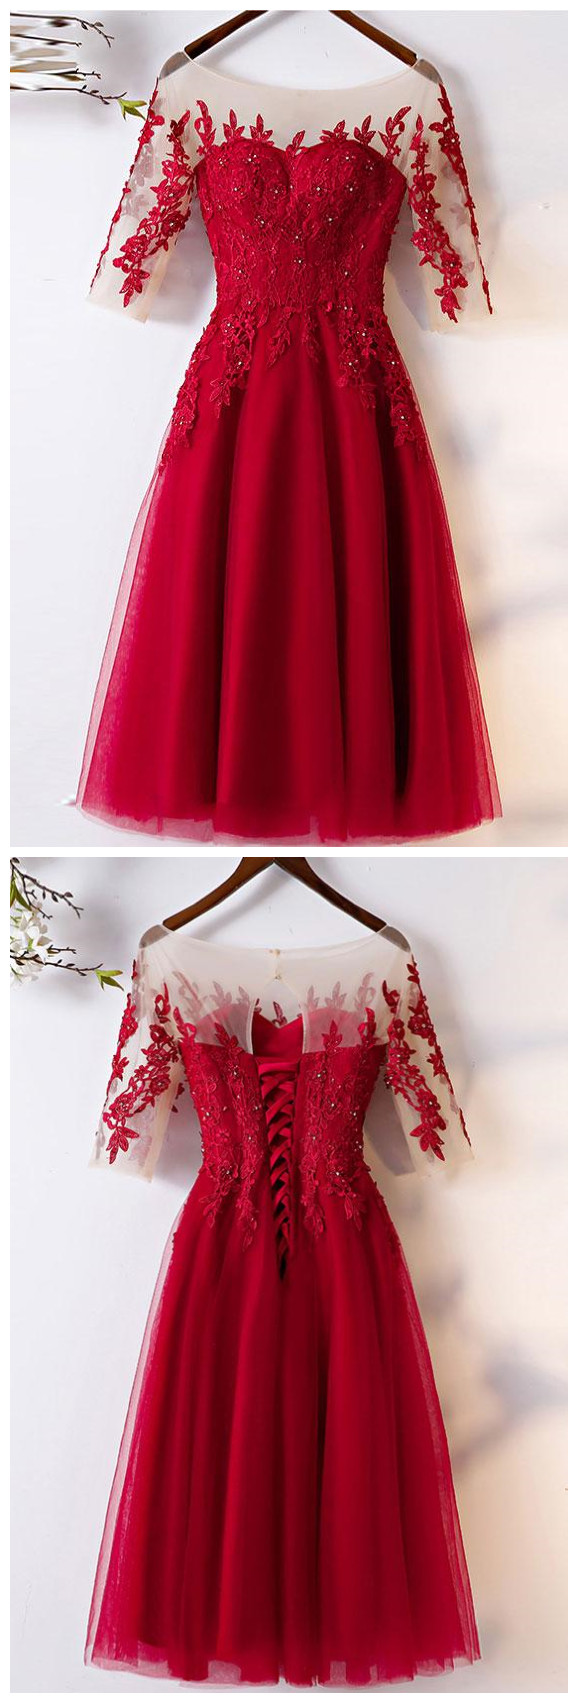 Tulle Round Neck Prom Dress,tea Length Half Sleeves Evening Dress,wedding Party Dress